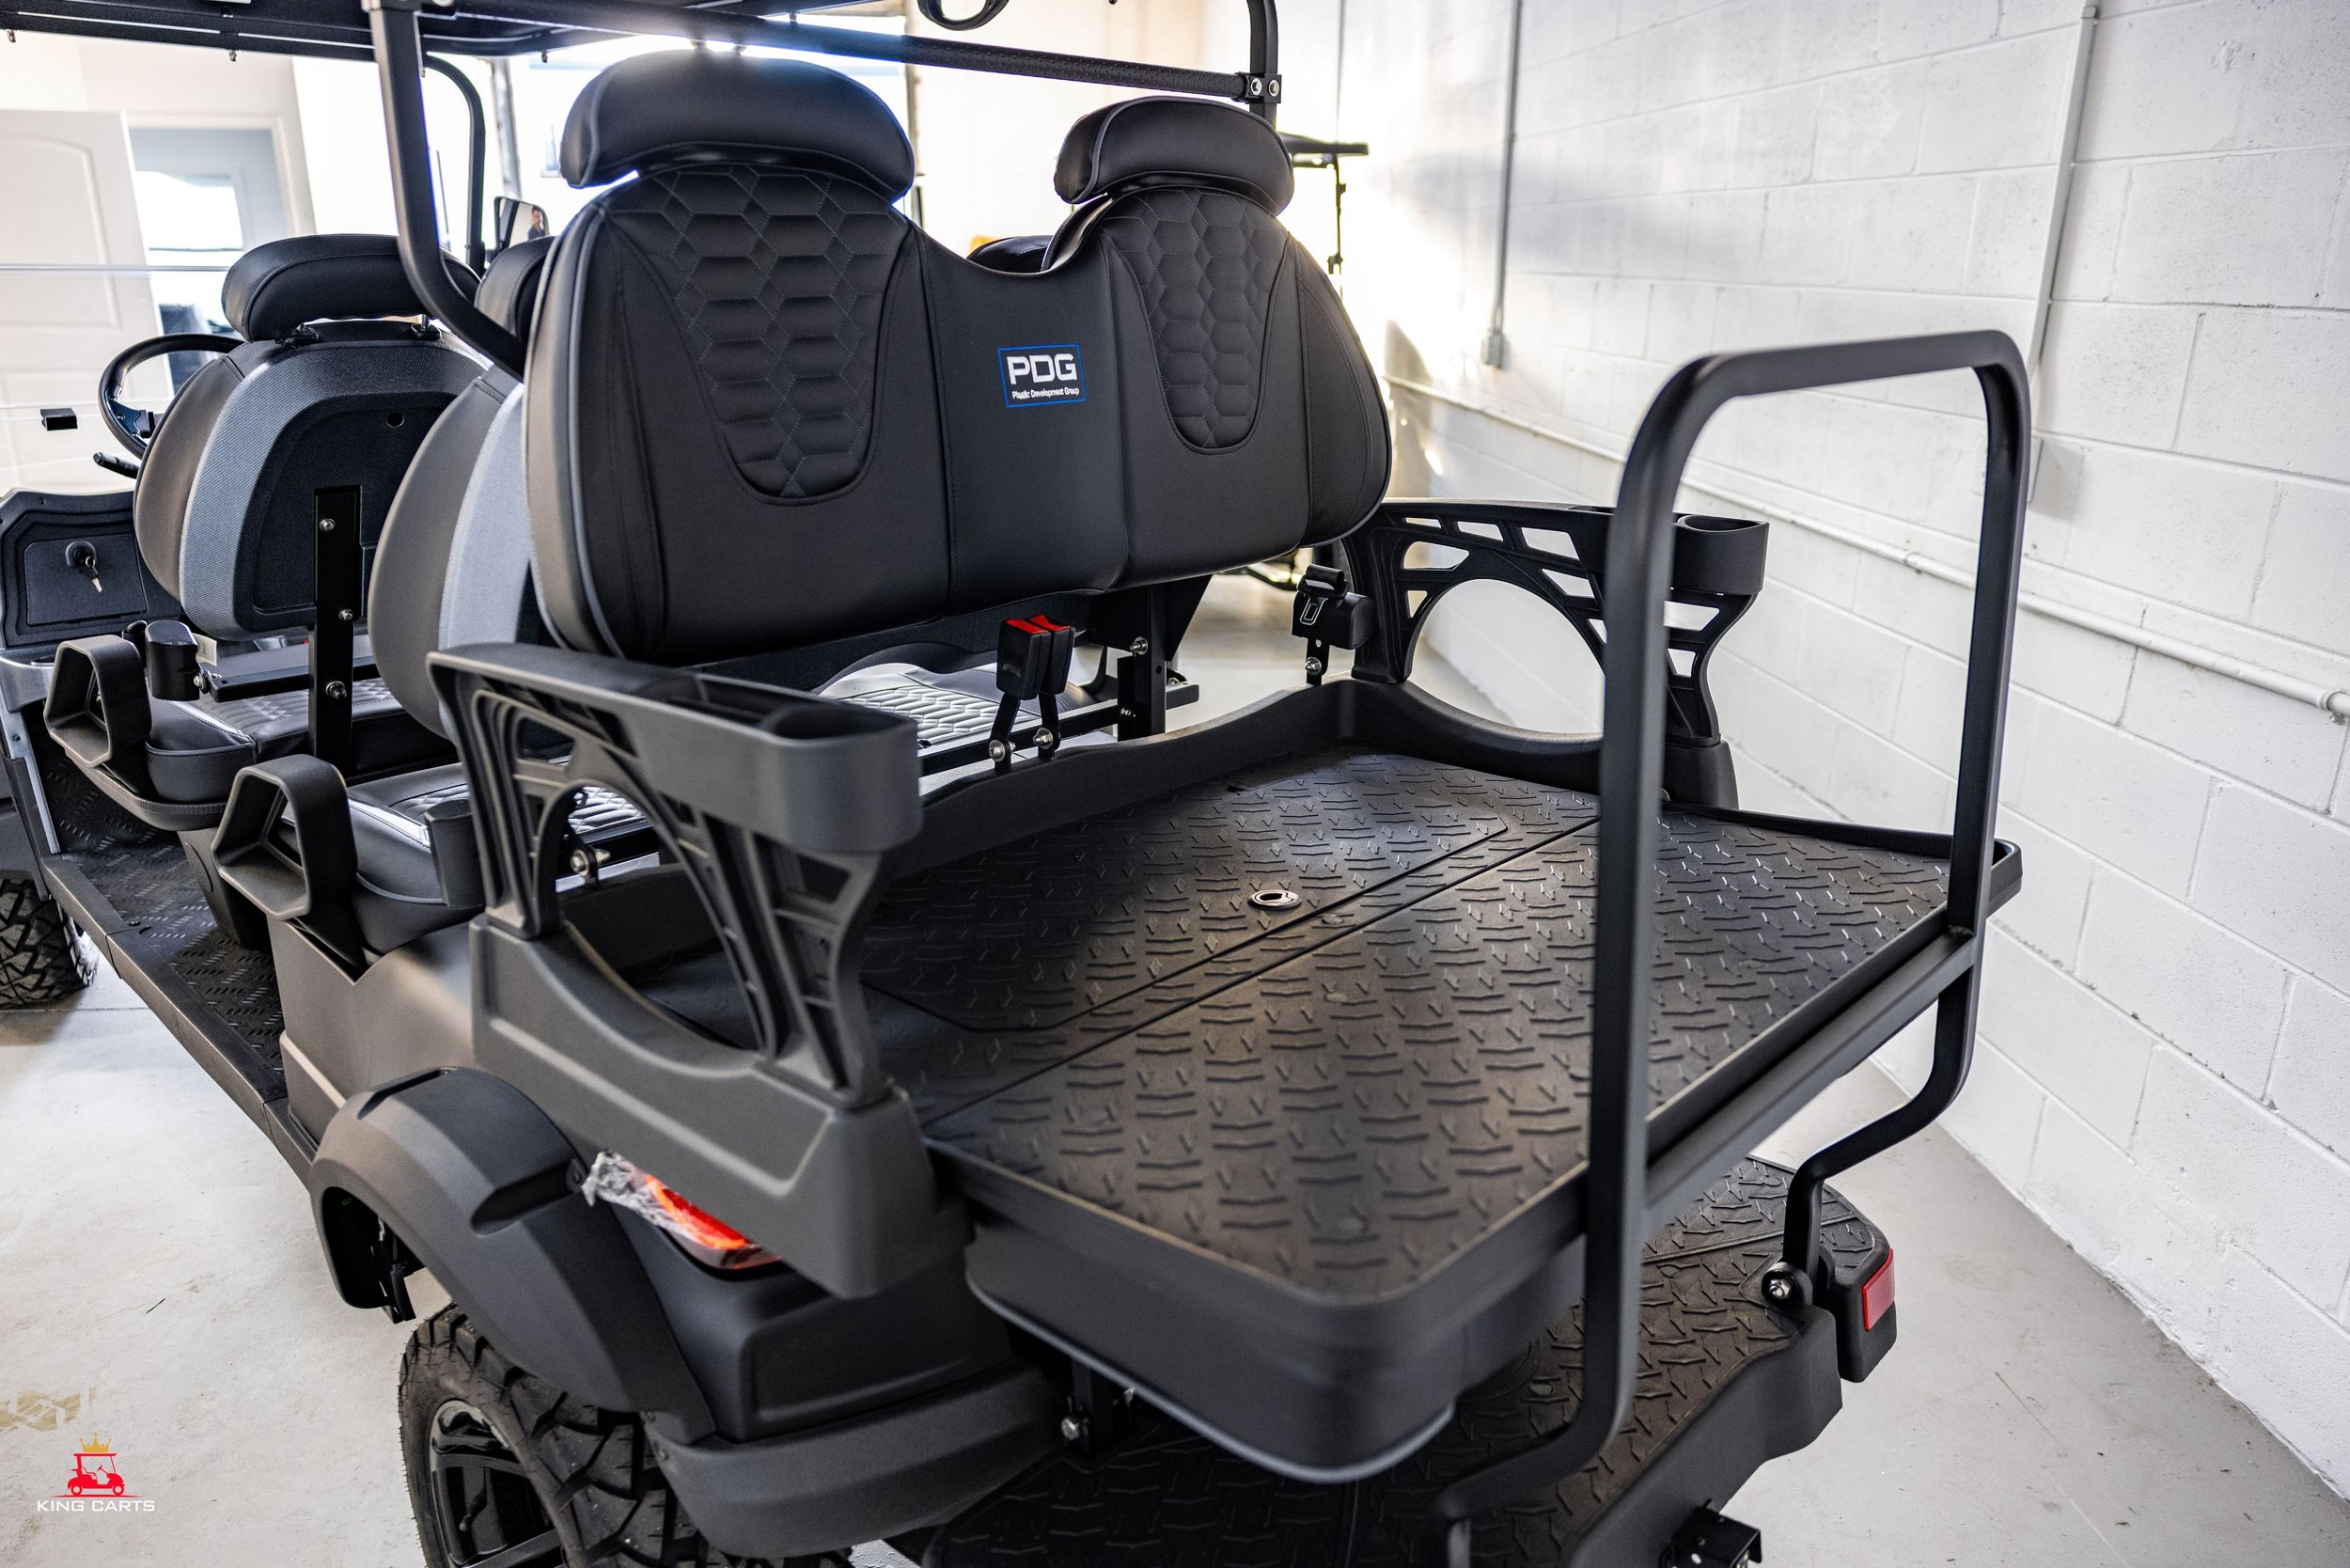 4 Seater Electric Golf Cart - Matte Black — Plastic Development Group